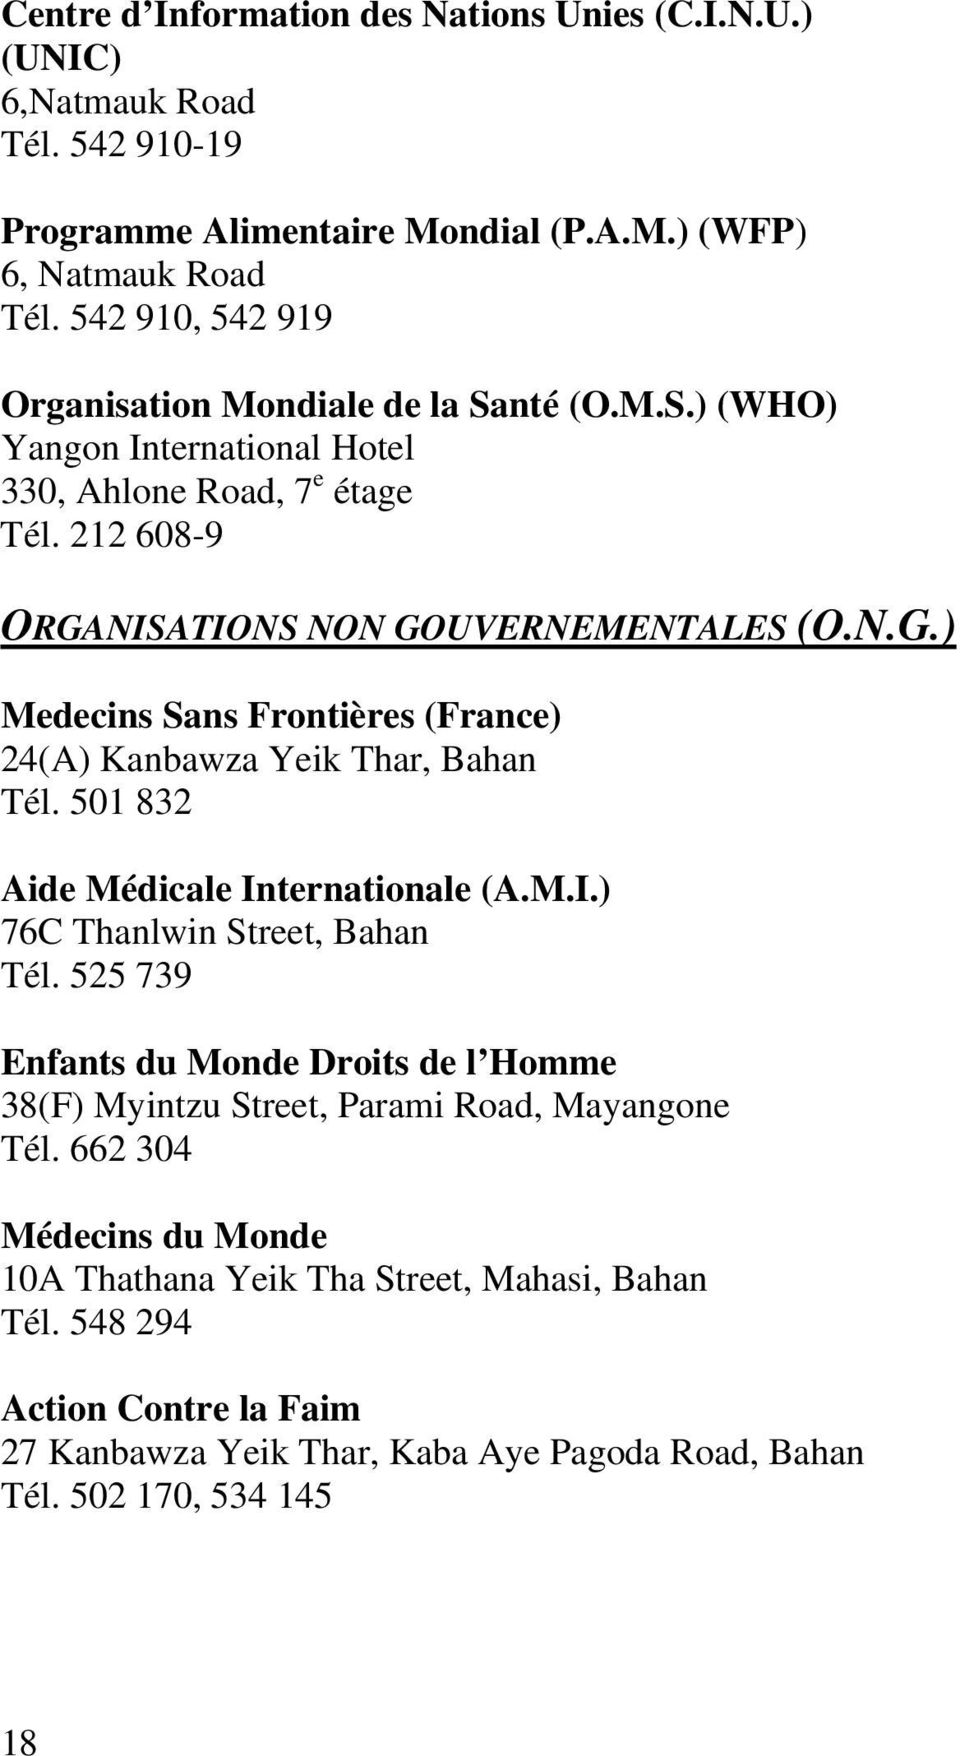 NISATIONS NON GOUVERNEMENTALES (O.N.G.) Medecins Sans Frontières (France) 24(A) Kanbawza Yeik Thar, Bahan Tél. 501 832 Aide Médicale Internationale (A.M.I.) 76C Thanlwin Street, Bahan Tél.